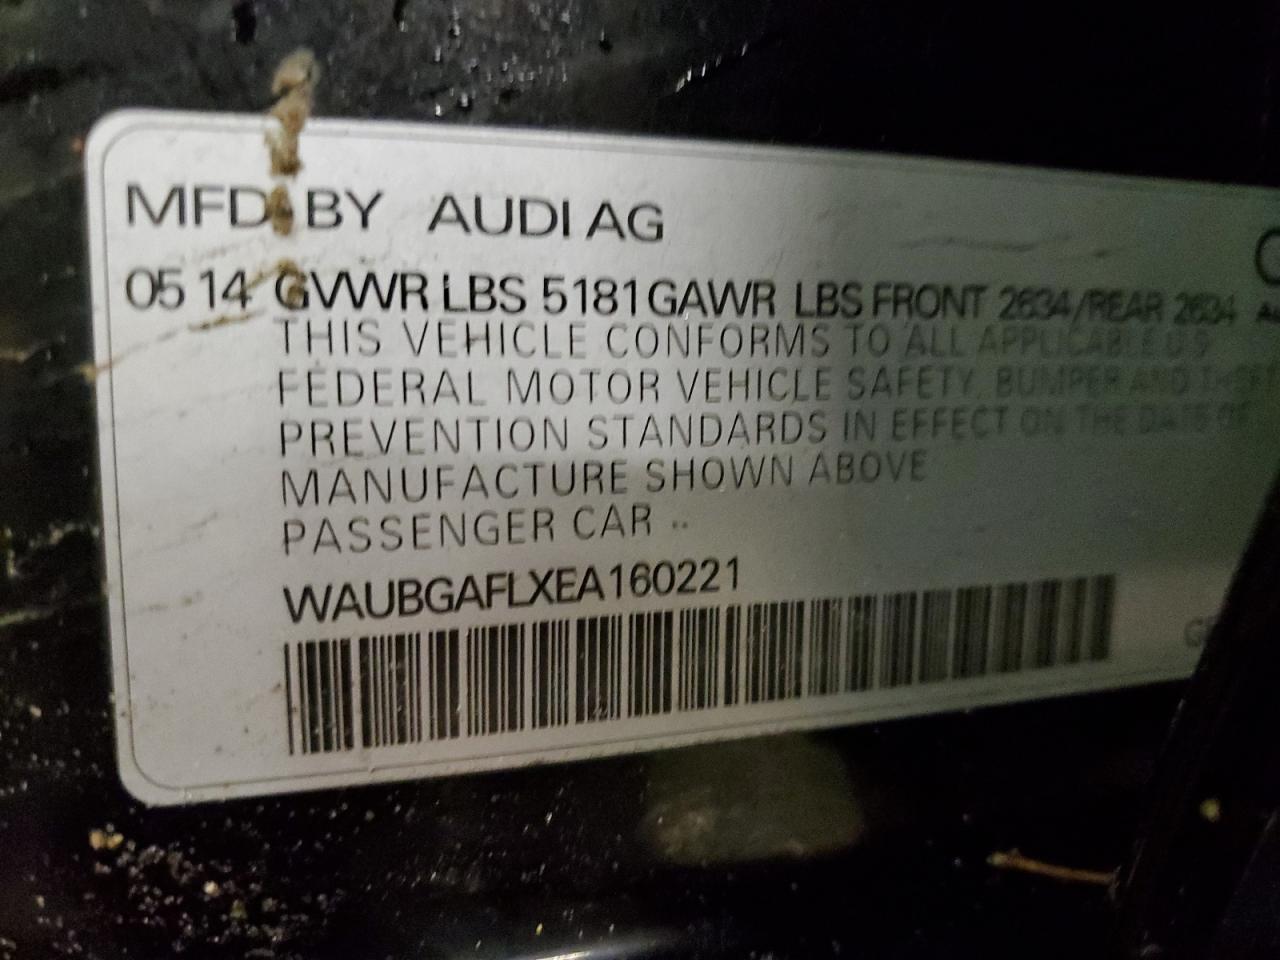 WAUBGAFLXEA160221  - AUDI RS4  2014 IMG - 11